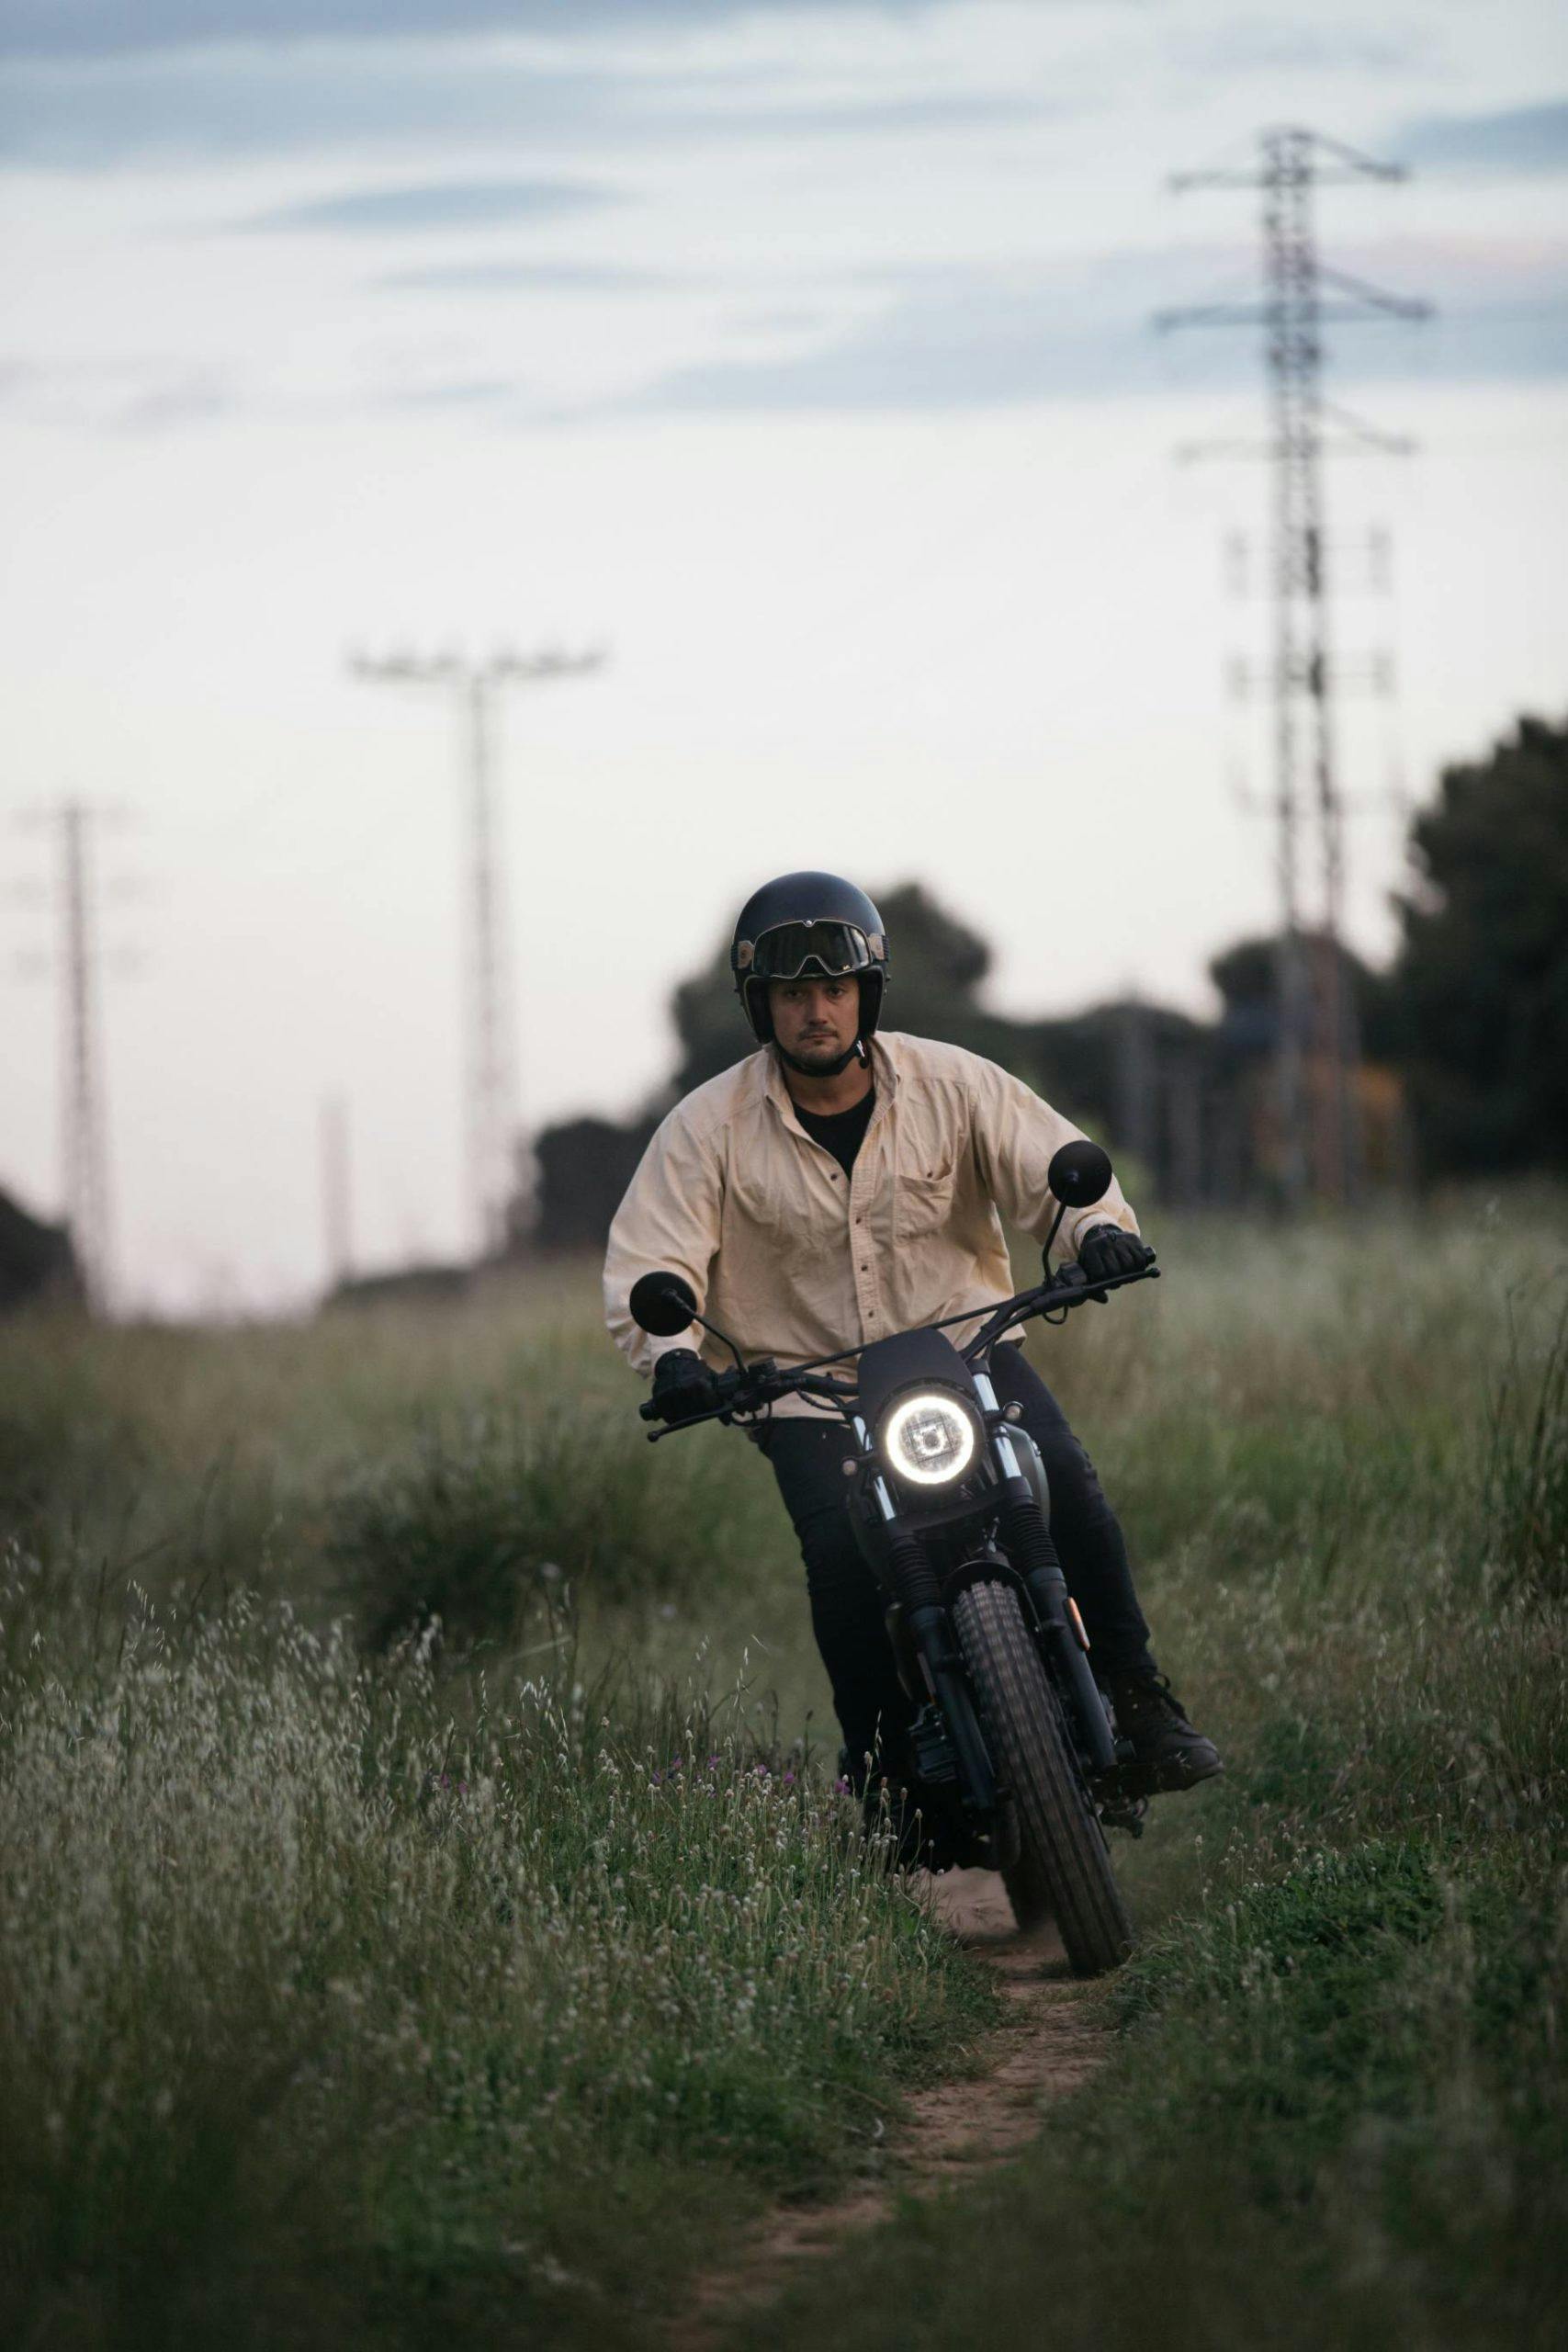 Motorcyclist riding a Brixton Felsberg 125 in Cargo Green through a field